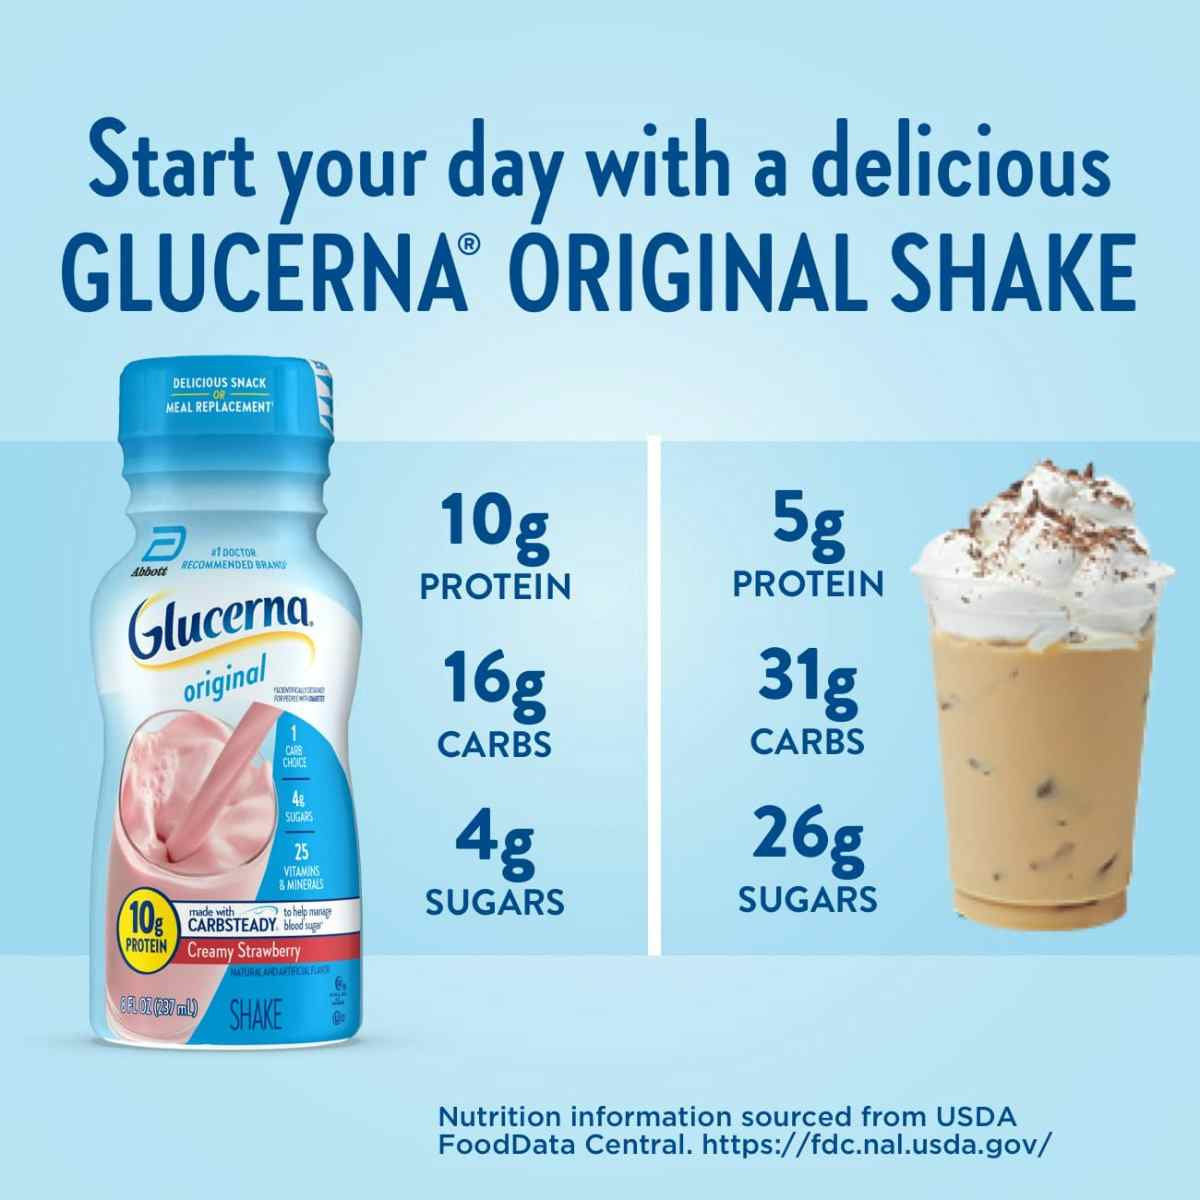 Glucerna Ready to Use Oral Supplement Shake, Bottle, Creamy Strawberry Flavor, 8 oz.